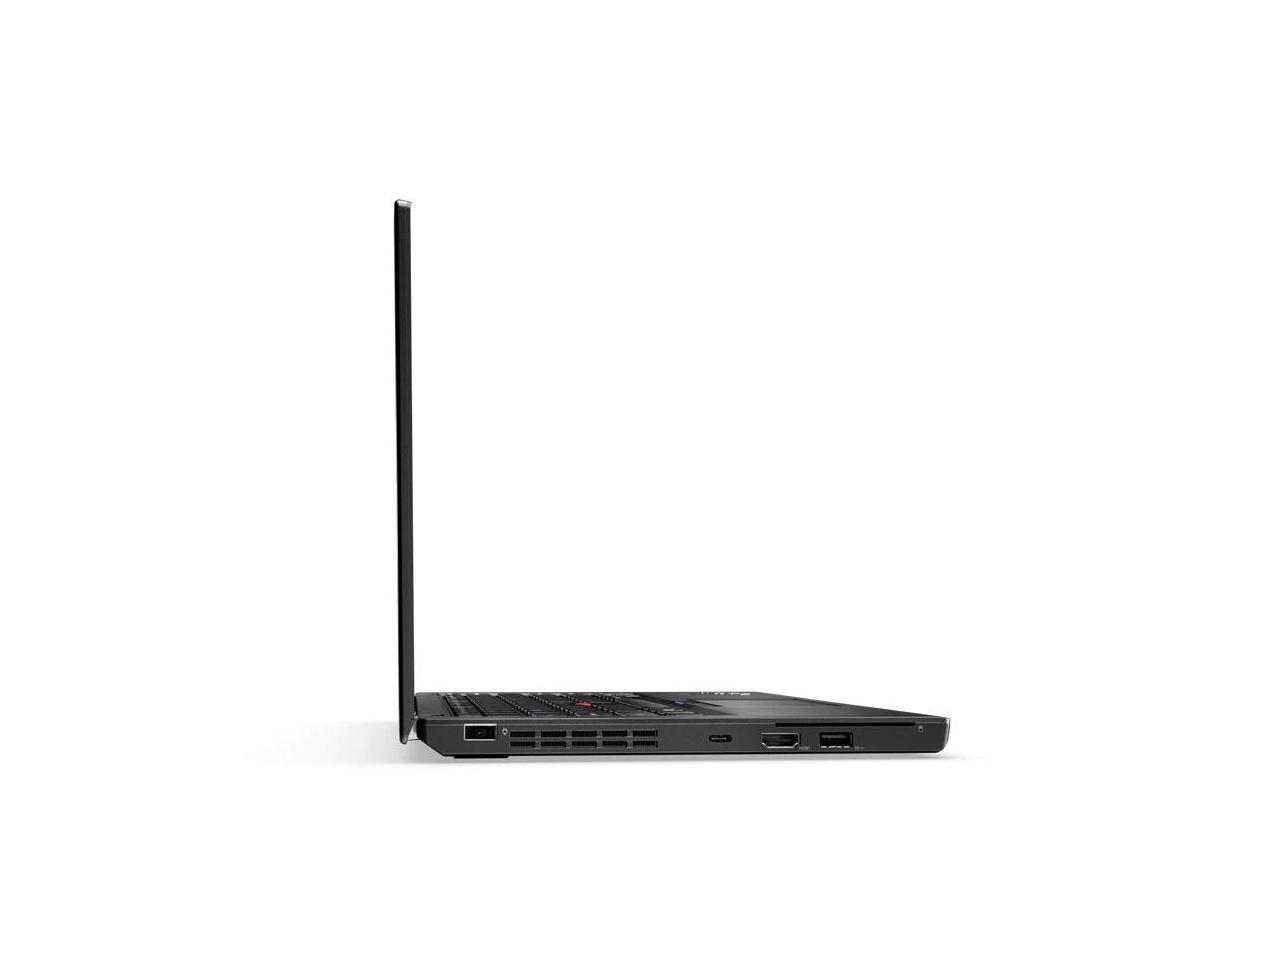 Lenovo ThinkPad x270 12.5 Intel Core i5-6300U 16GB 256GB WCam Windows 10 Pro